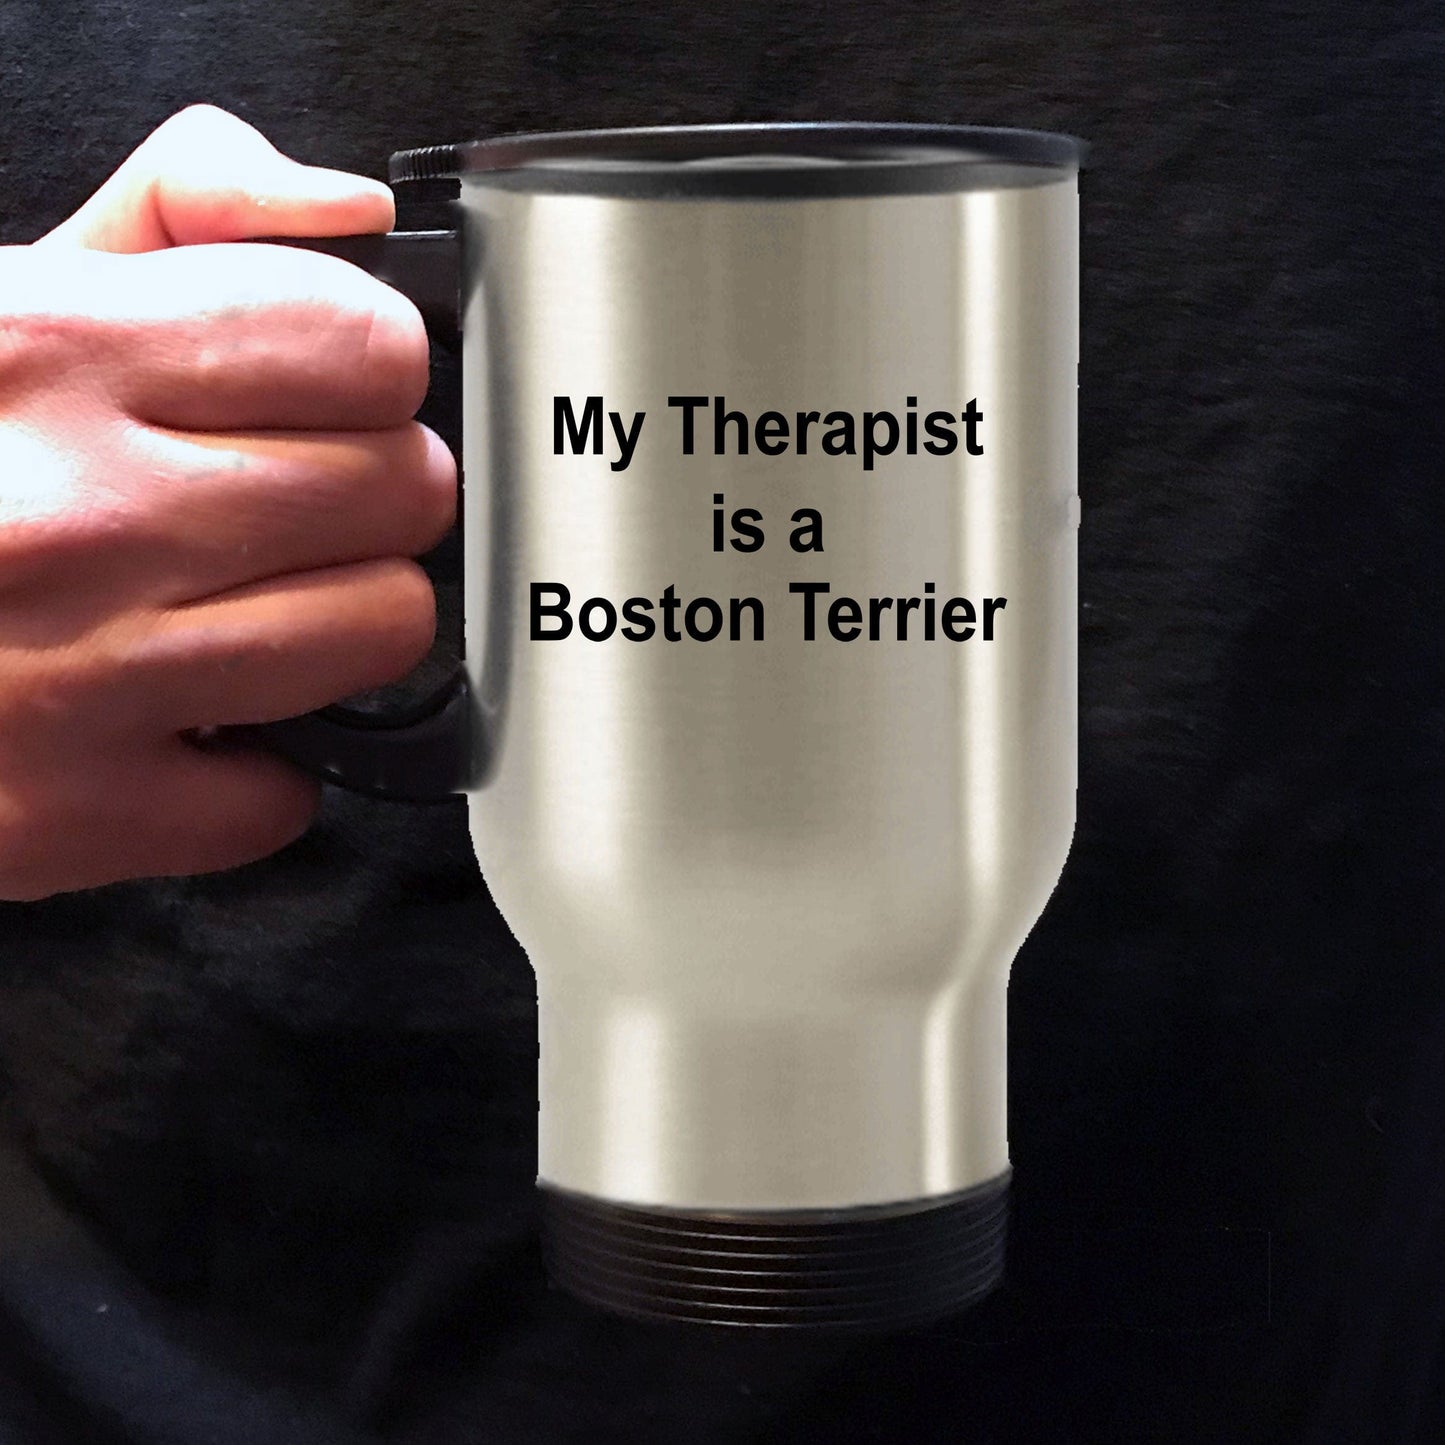 Boston Terrier Dog Therapist Travel Coffee Mug